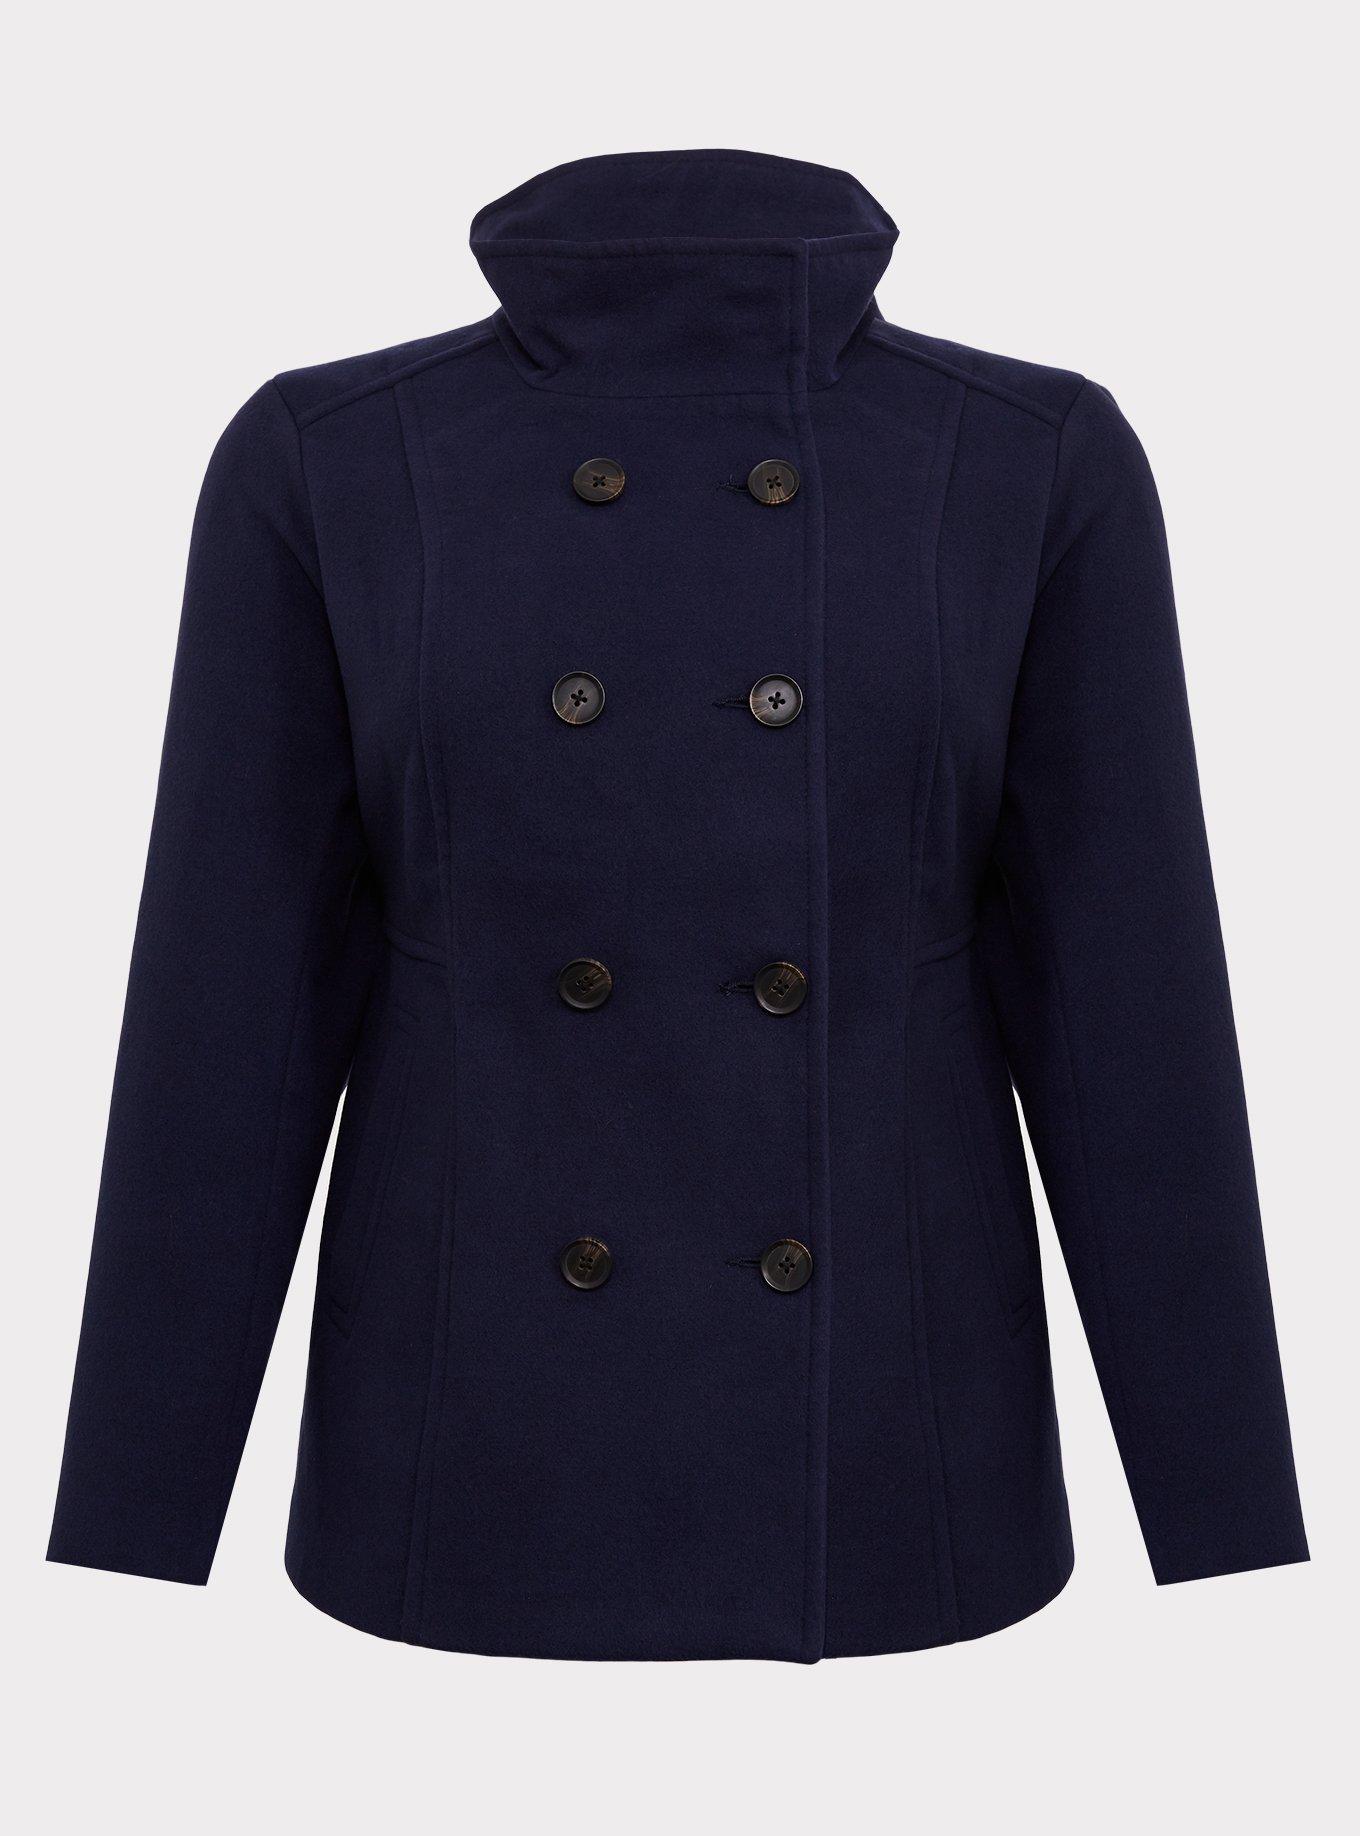 S/S 2015 Pea Coat, Authentic & Vintage